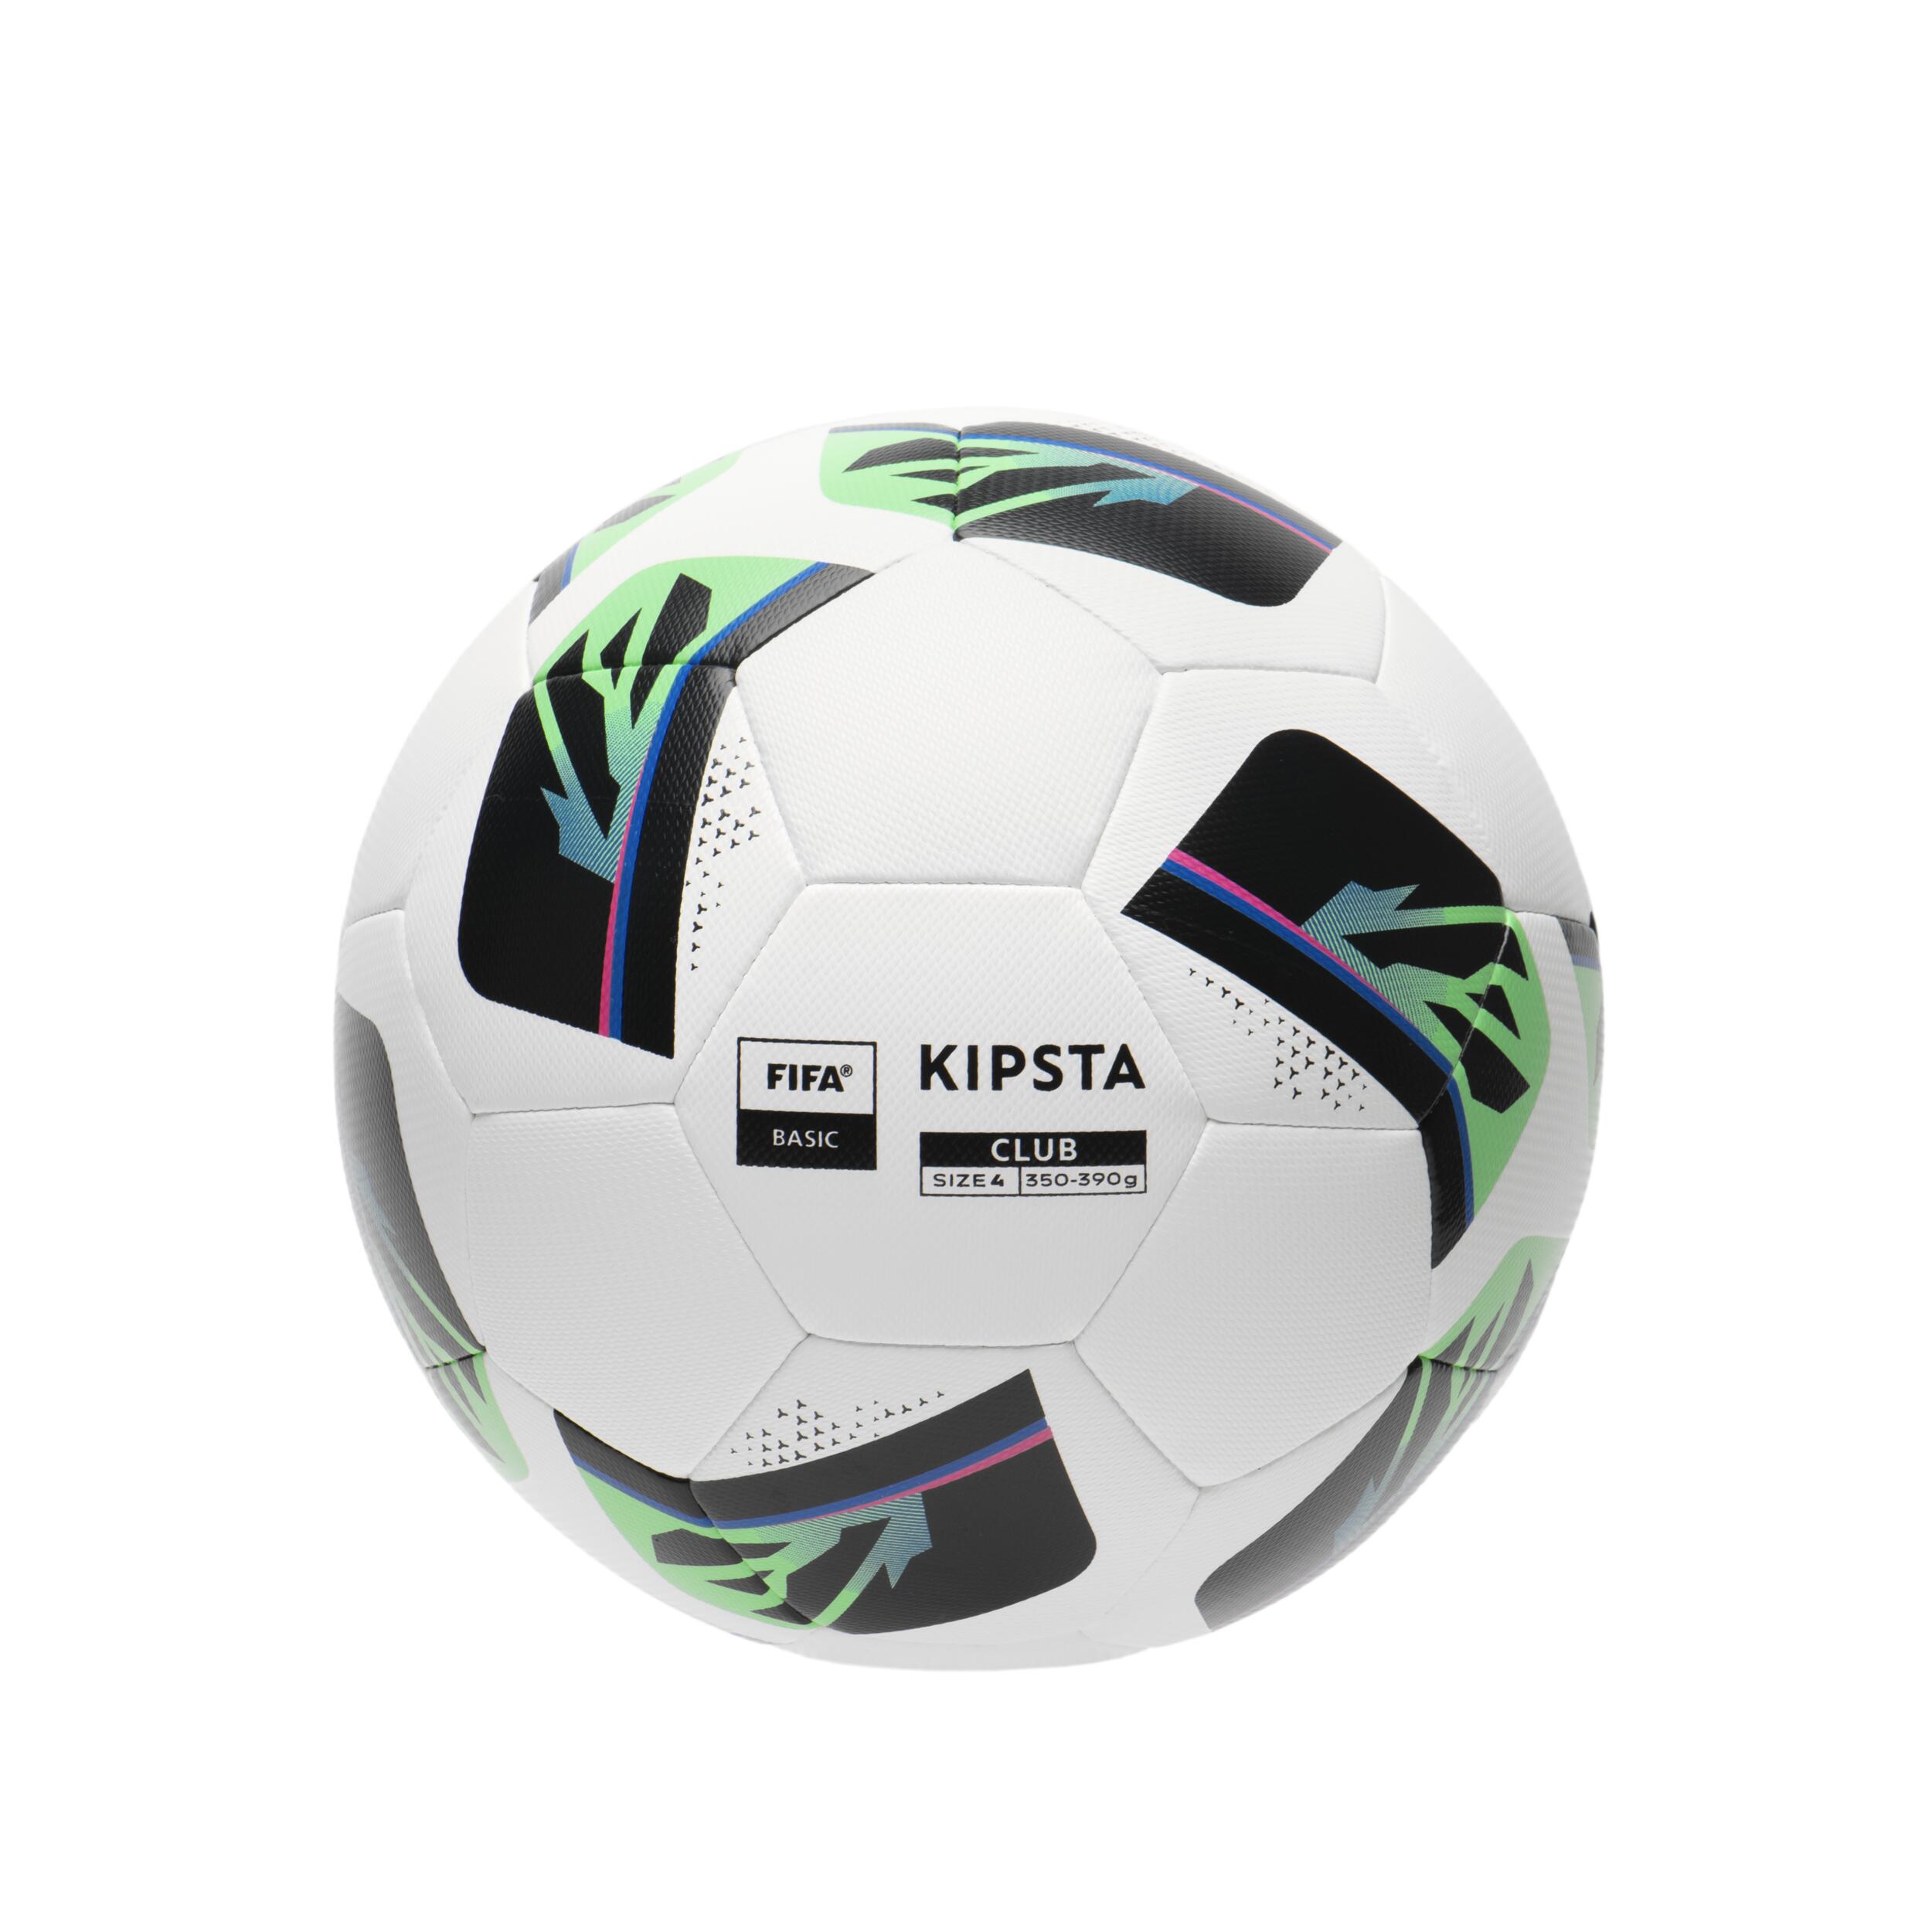 Kipsta Size 4 Fifa Basic Football Club Hybrid - White